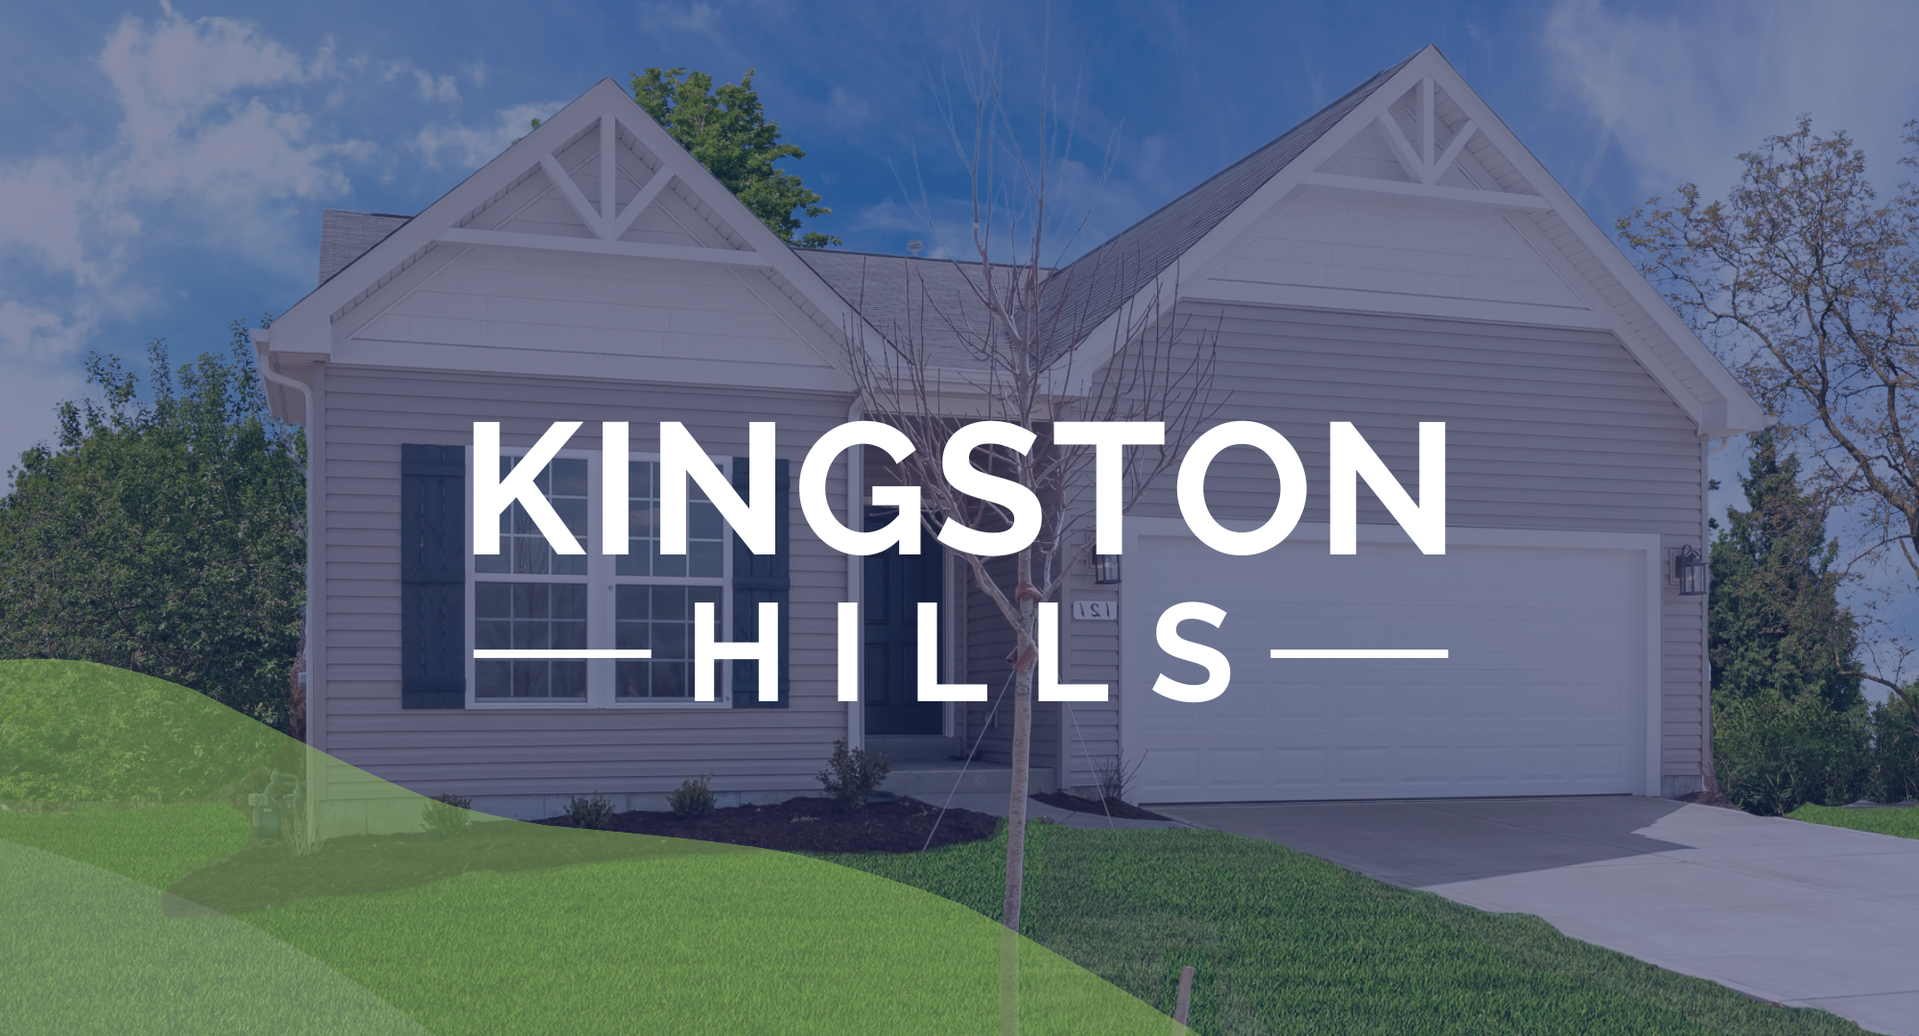 Kingston Hills - Fenton, MO New Homes. New Homes in Fenton, MO